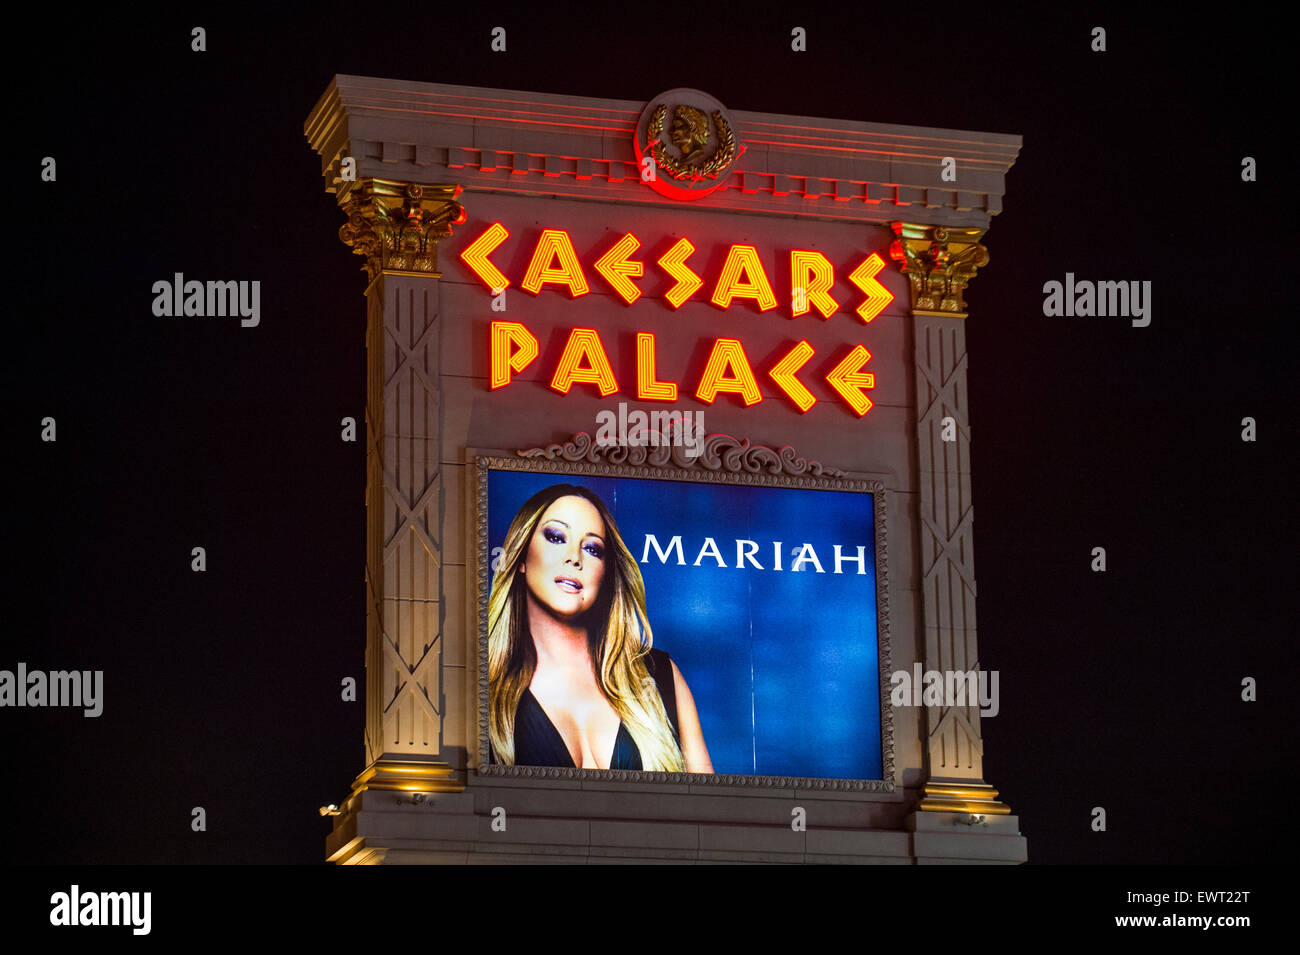 The Mariah Carey show poster at Caesars palace hotel in Las Vegas Stock Photo